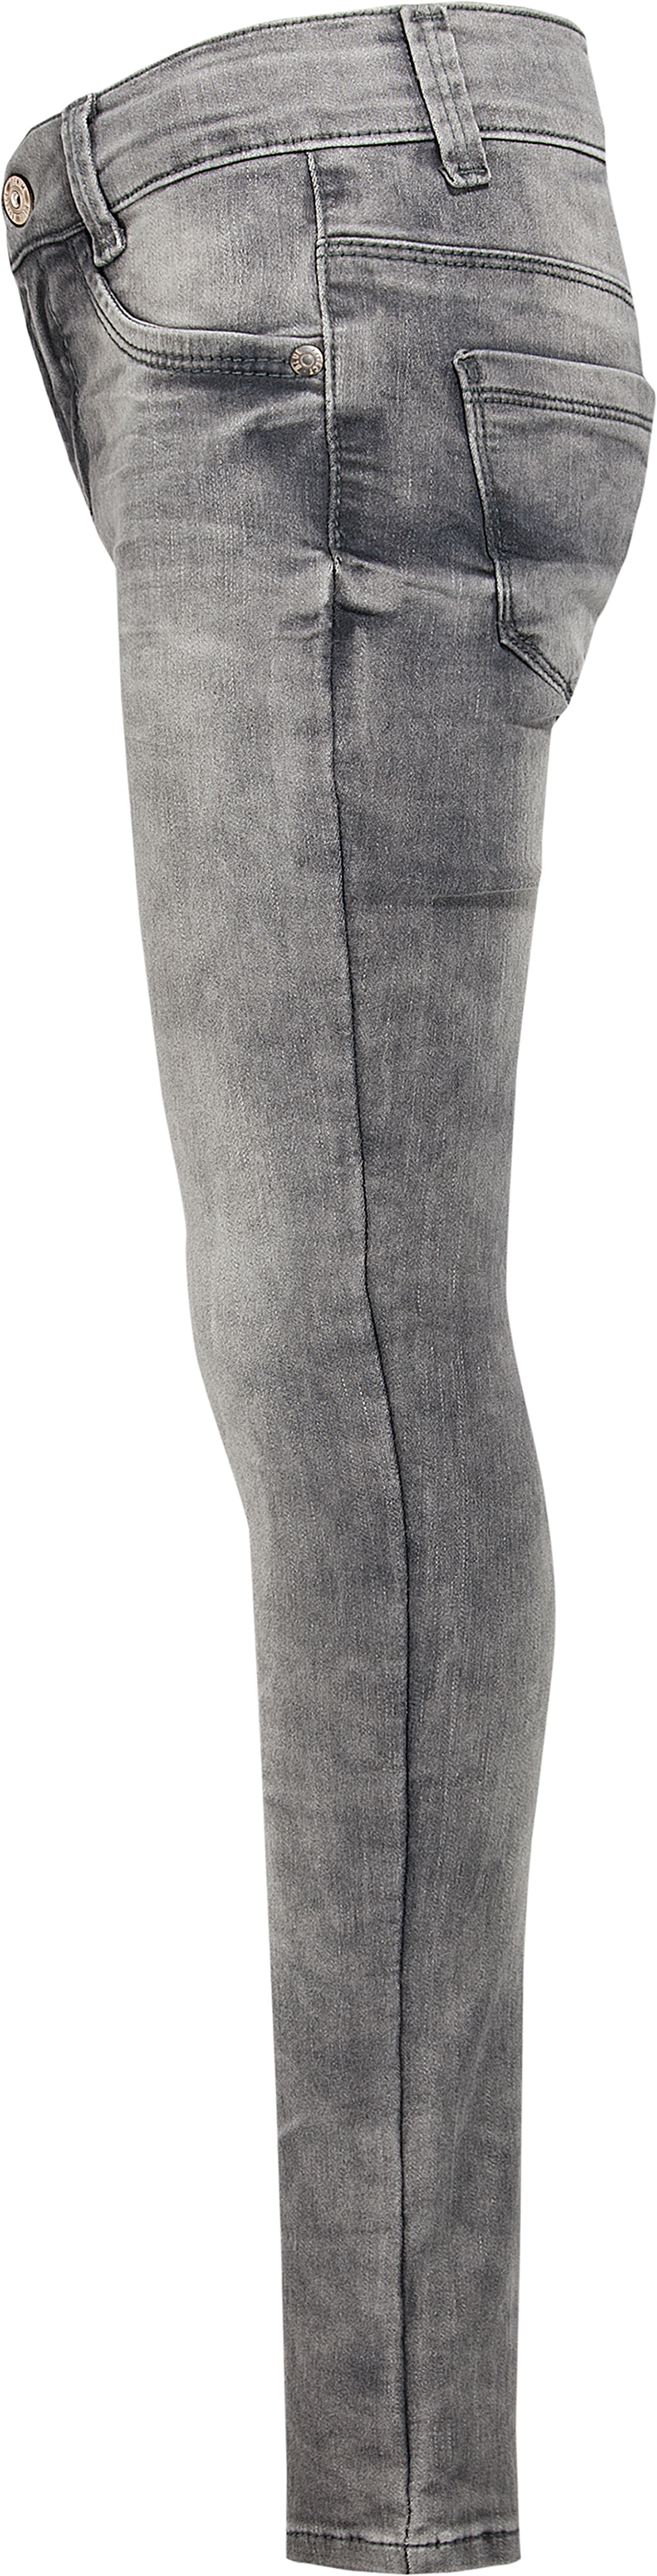 0126-NOS Girls Jeans Special Skinny, Ultrastretch, verfügbar in Slim,Normal,Wide